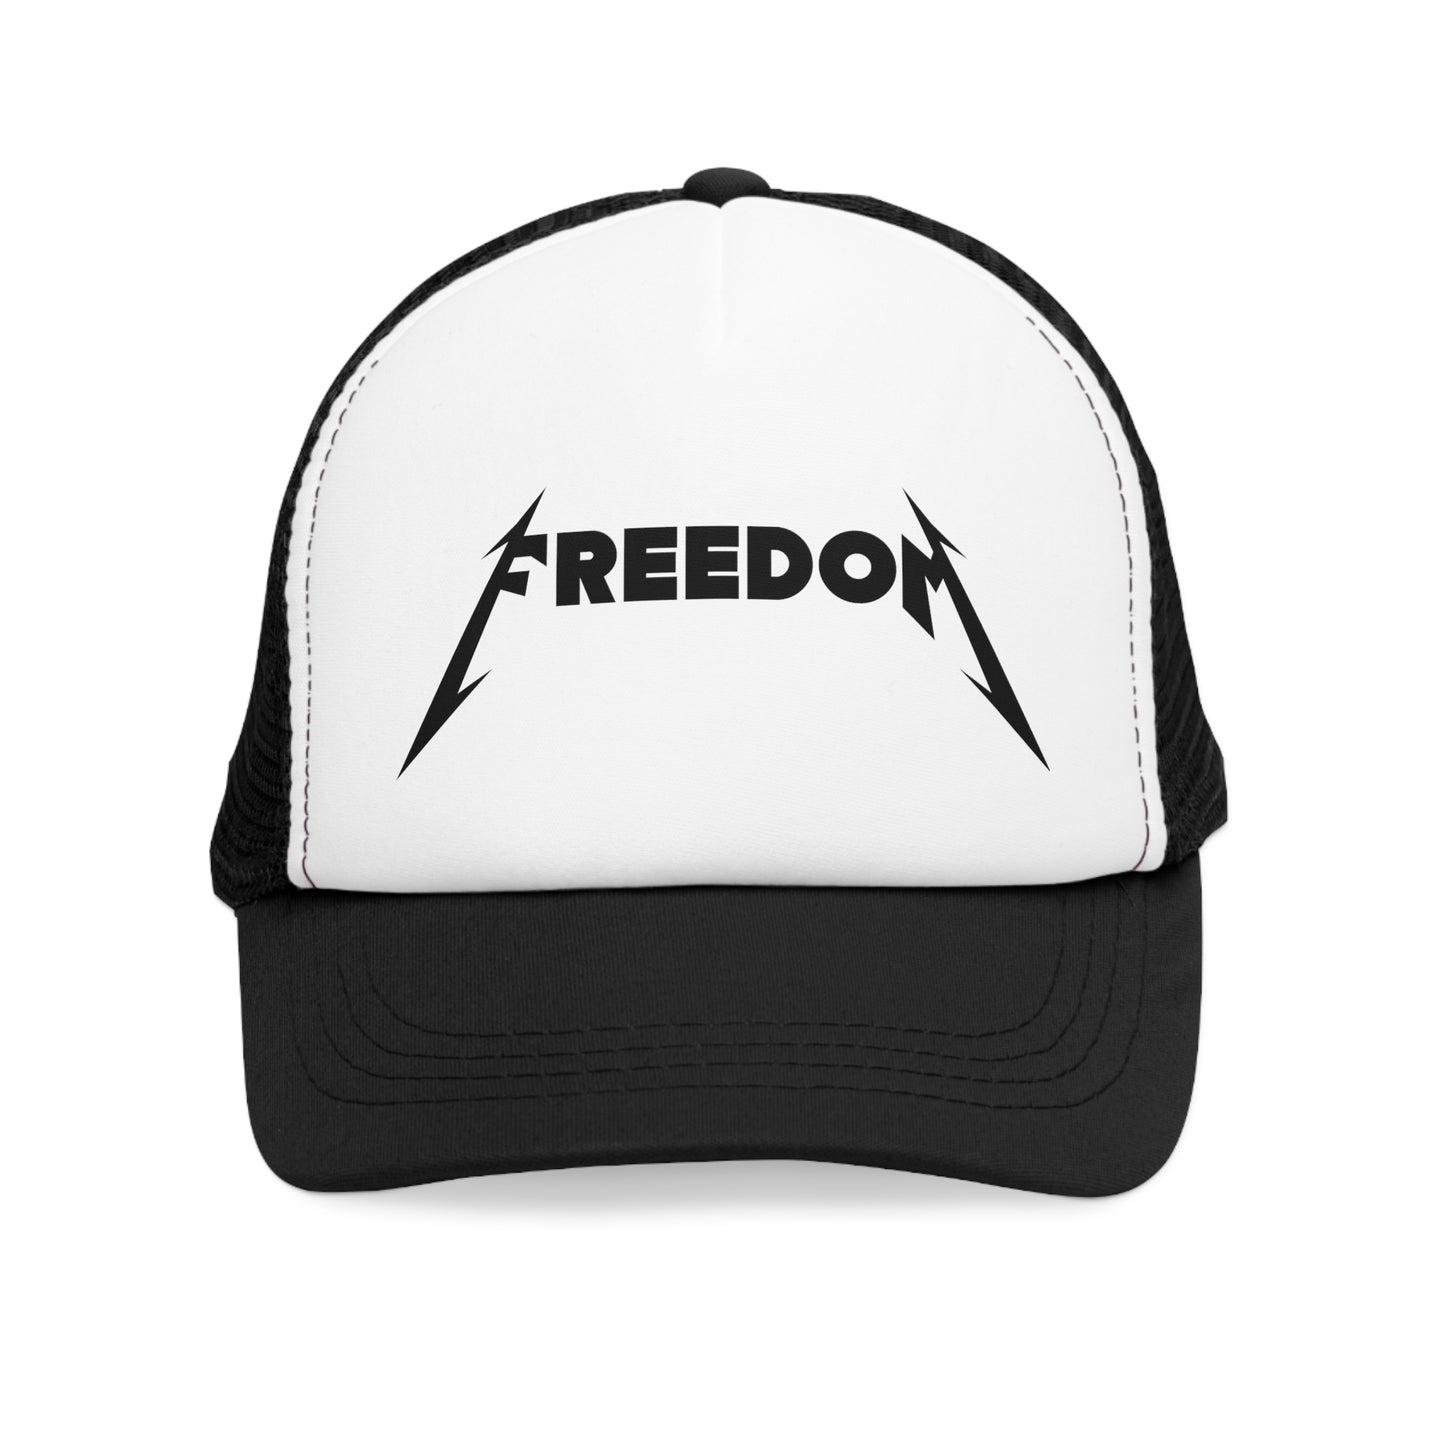 Freedom Metallica Mesh Cap